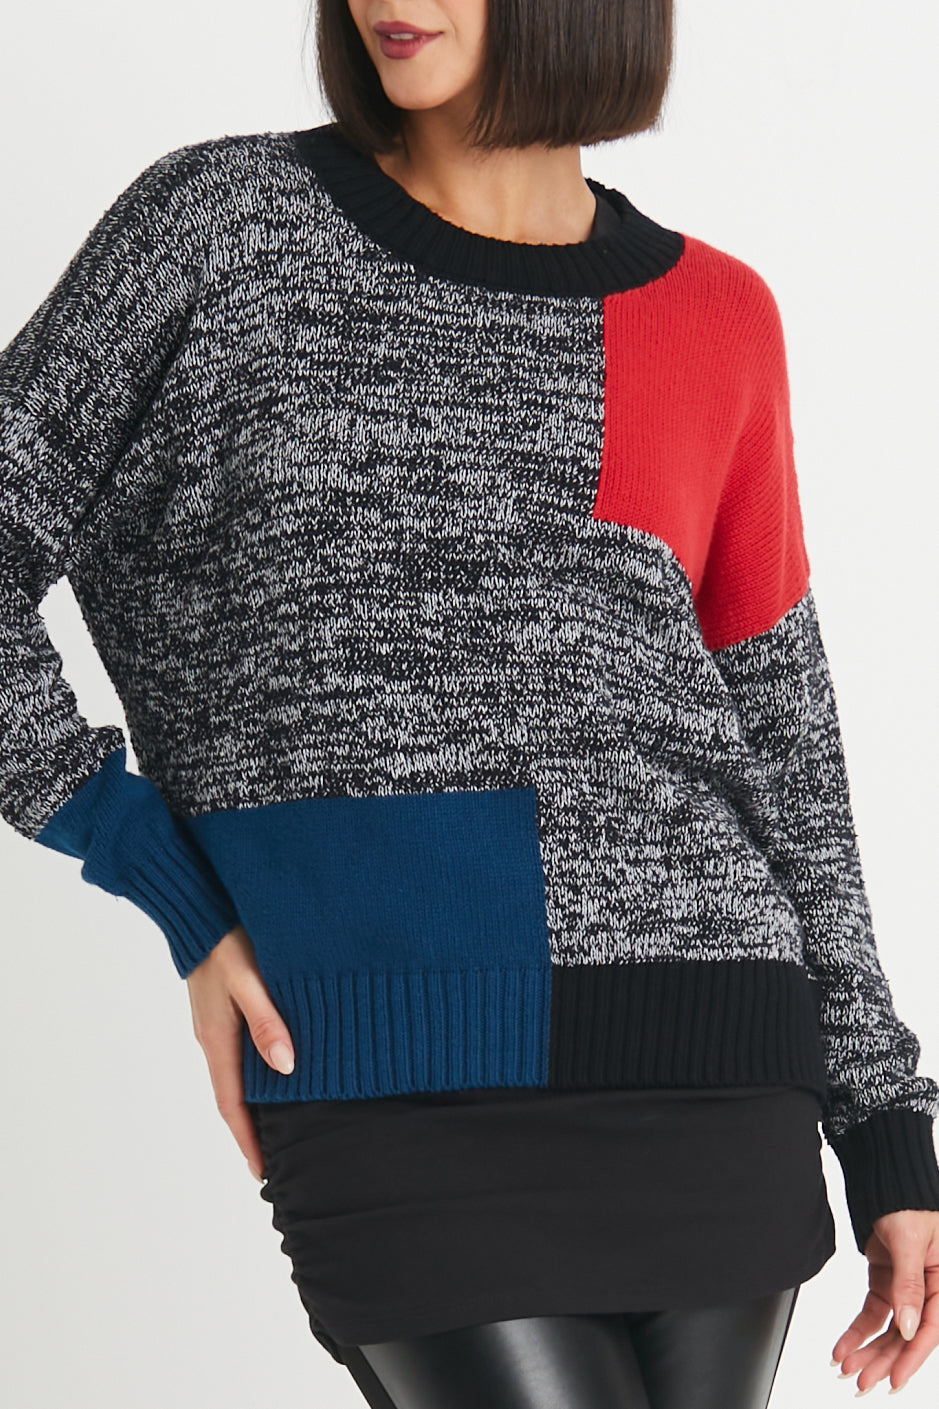 Pima Cotton Mondrian Crewneck Sweater